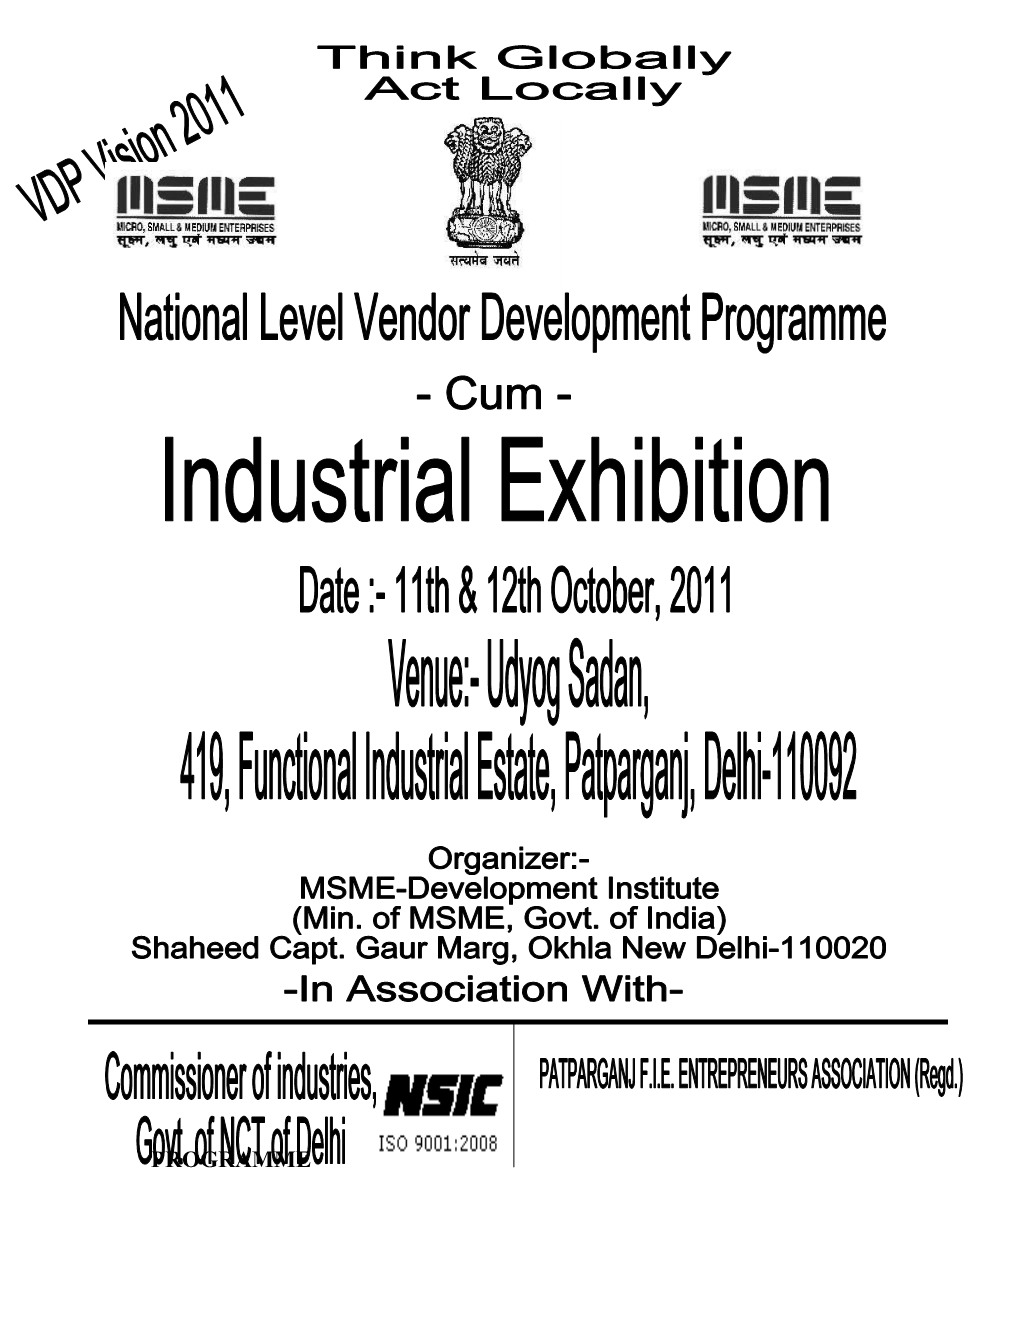 MSME-Development Institute, New Delhi in Association with Faridabad Small Industries Association